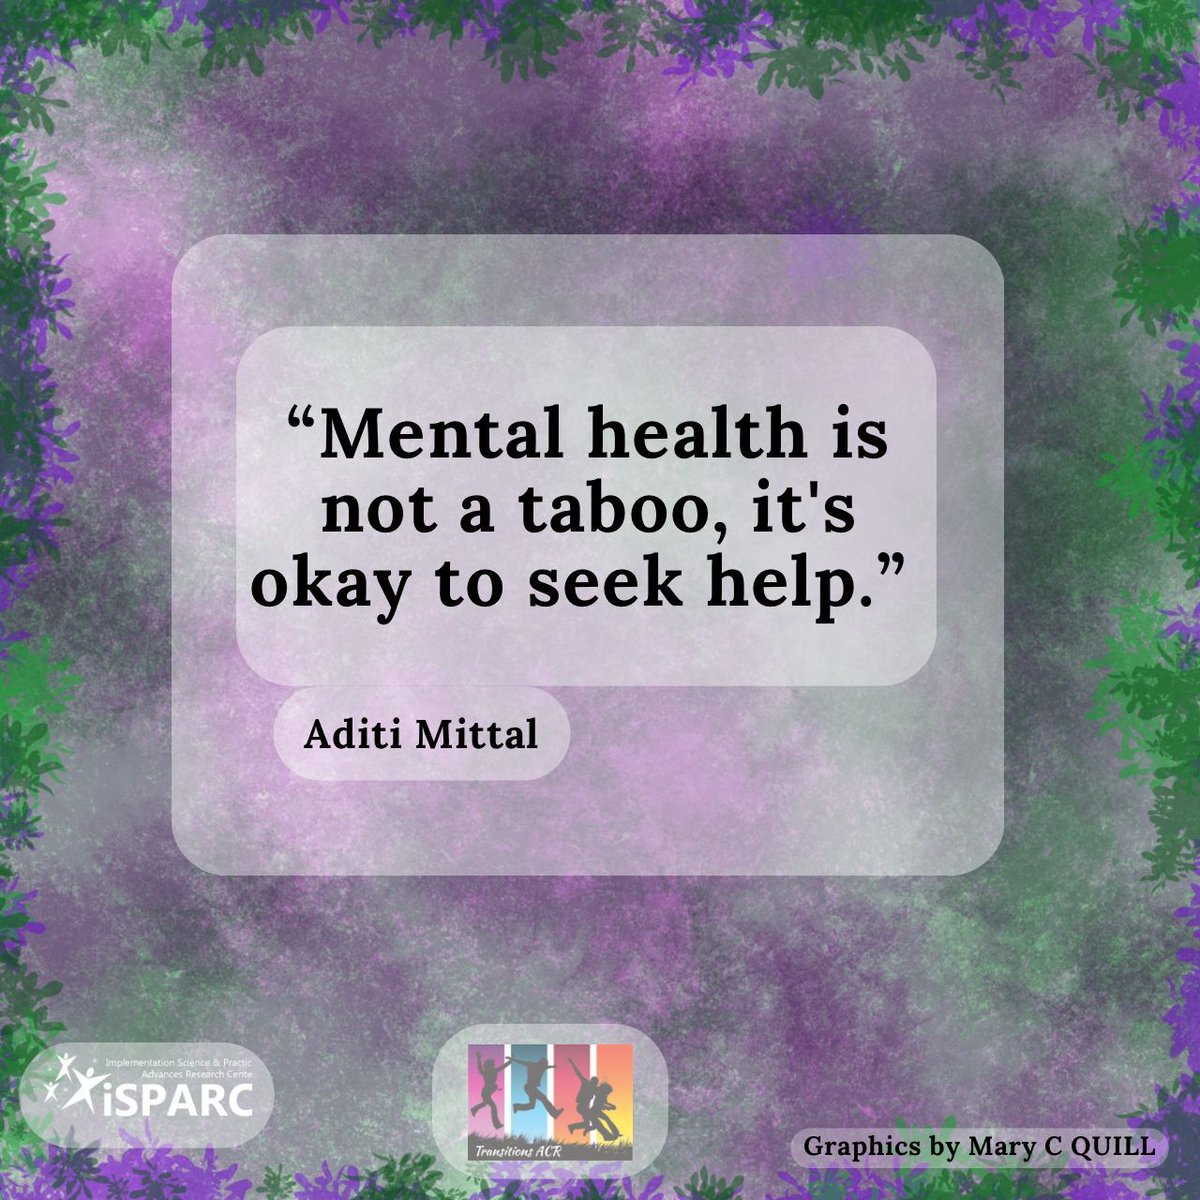 'Mental health is not a taboo, it's okay to seek help.' 
- Aditi Mittal 
#EndStigma #MayIsMentalHealthMonth #MayisMentalHealthAwarenessMonth #MentalHealthMatters
@UMass_SPARC